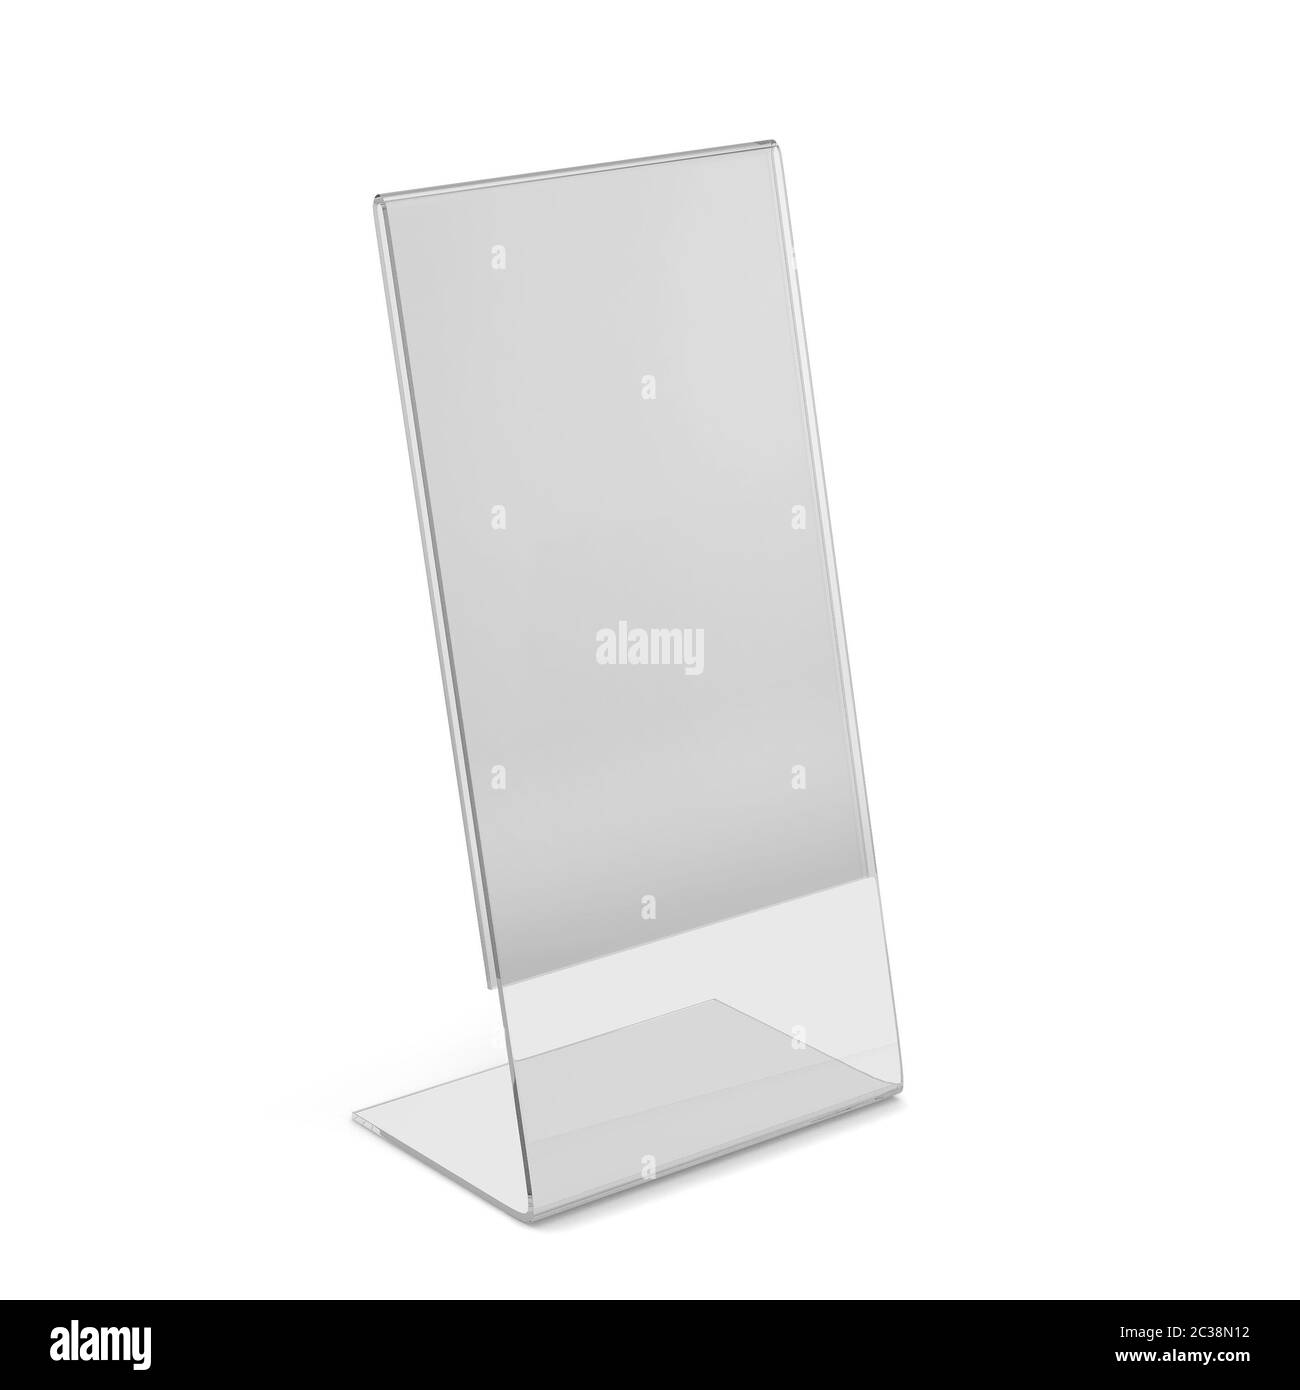 Acrylic holder stand. 3d illustration isolated on white background Stock Photo